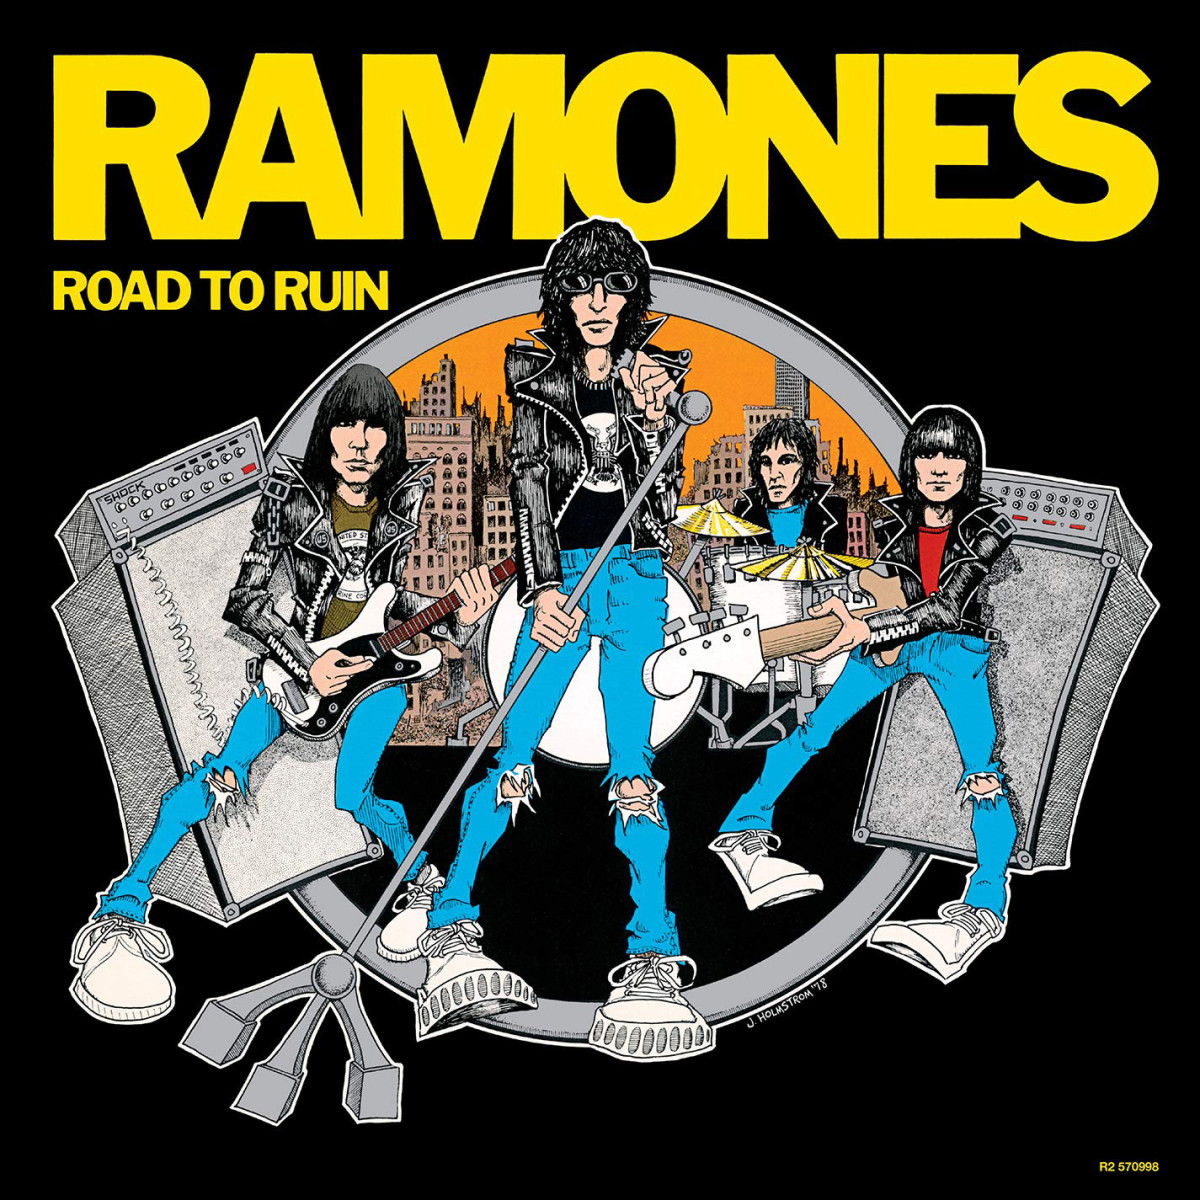 The Ramones Road to Ruin